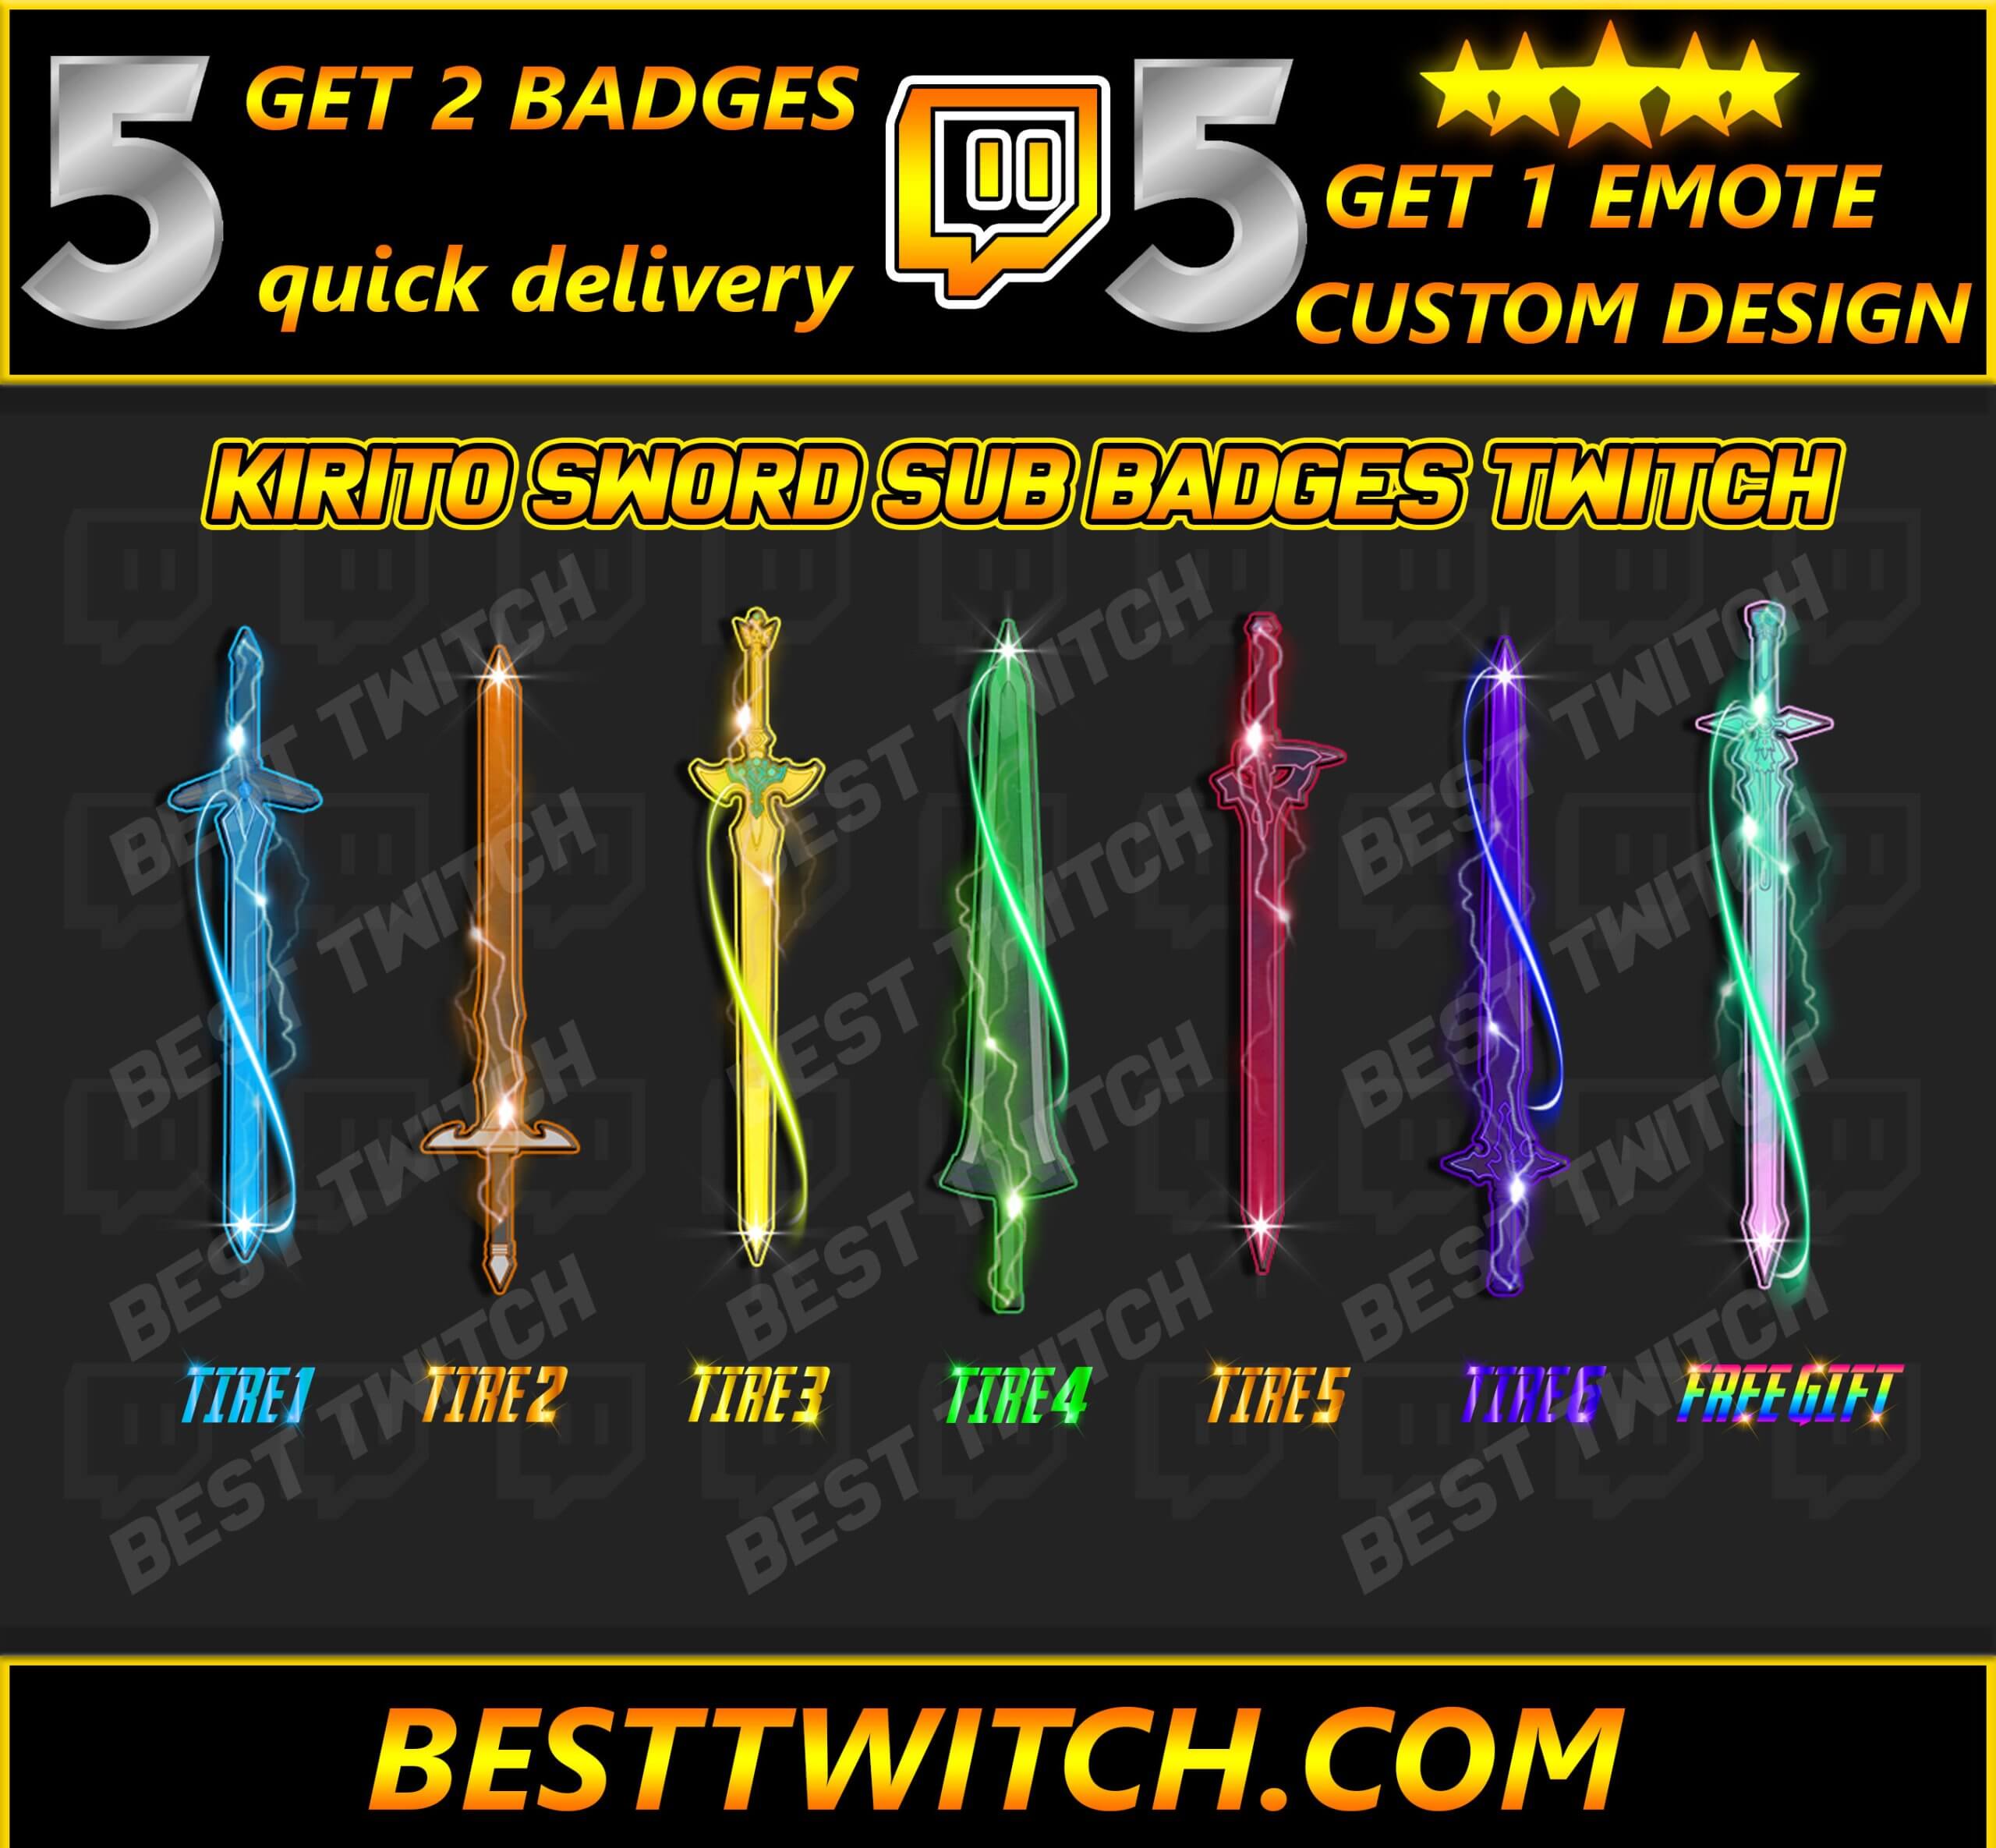 Swordmaster Kirito Sub Badges themed Loyalty Badges